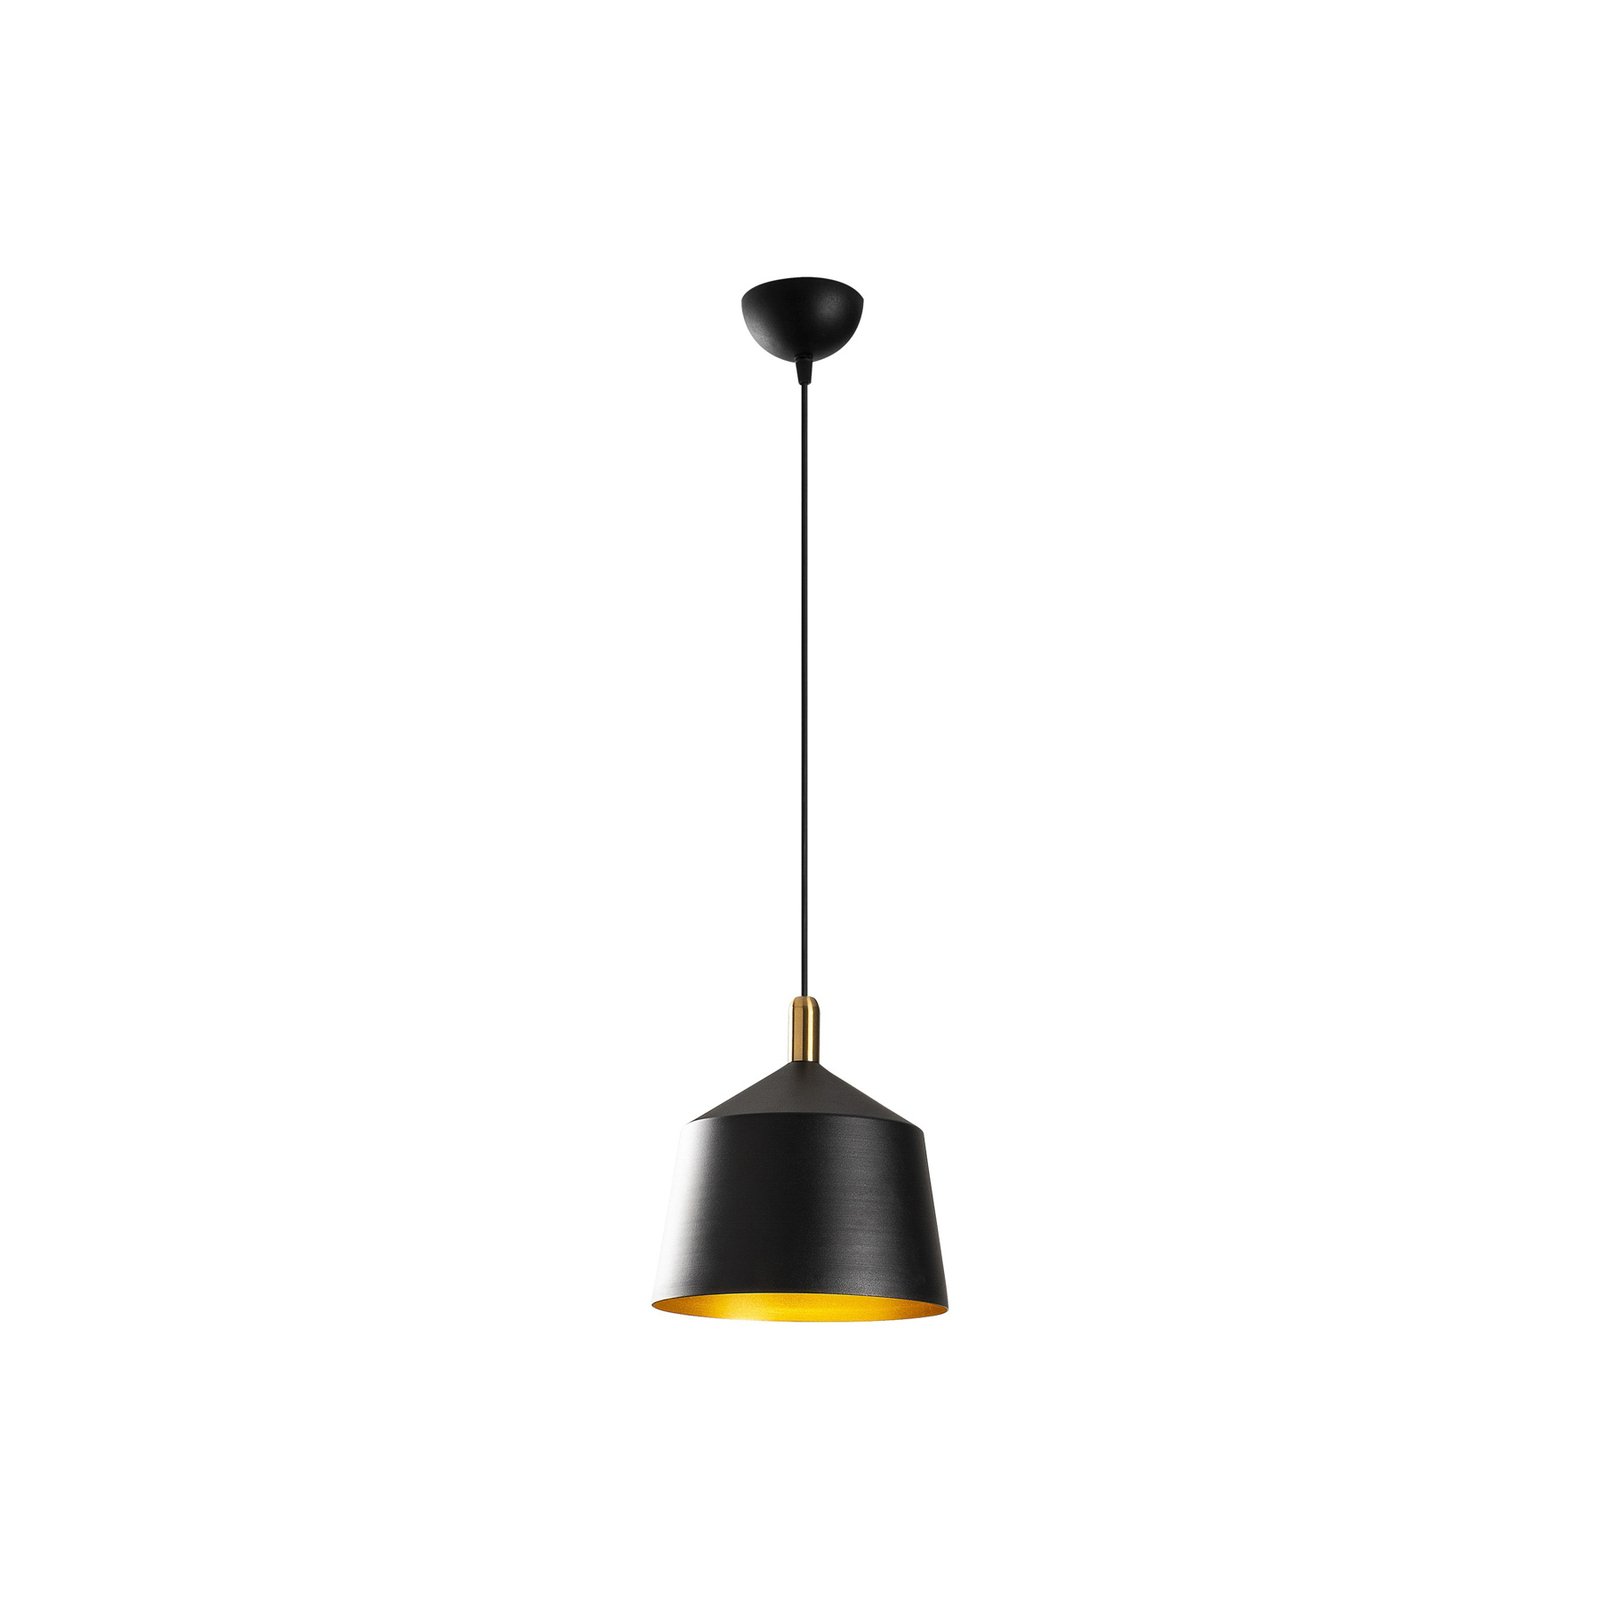 Hanglamp Saglam 3720 1-lamp Ø25cm zwart/goud